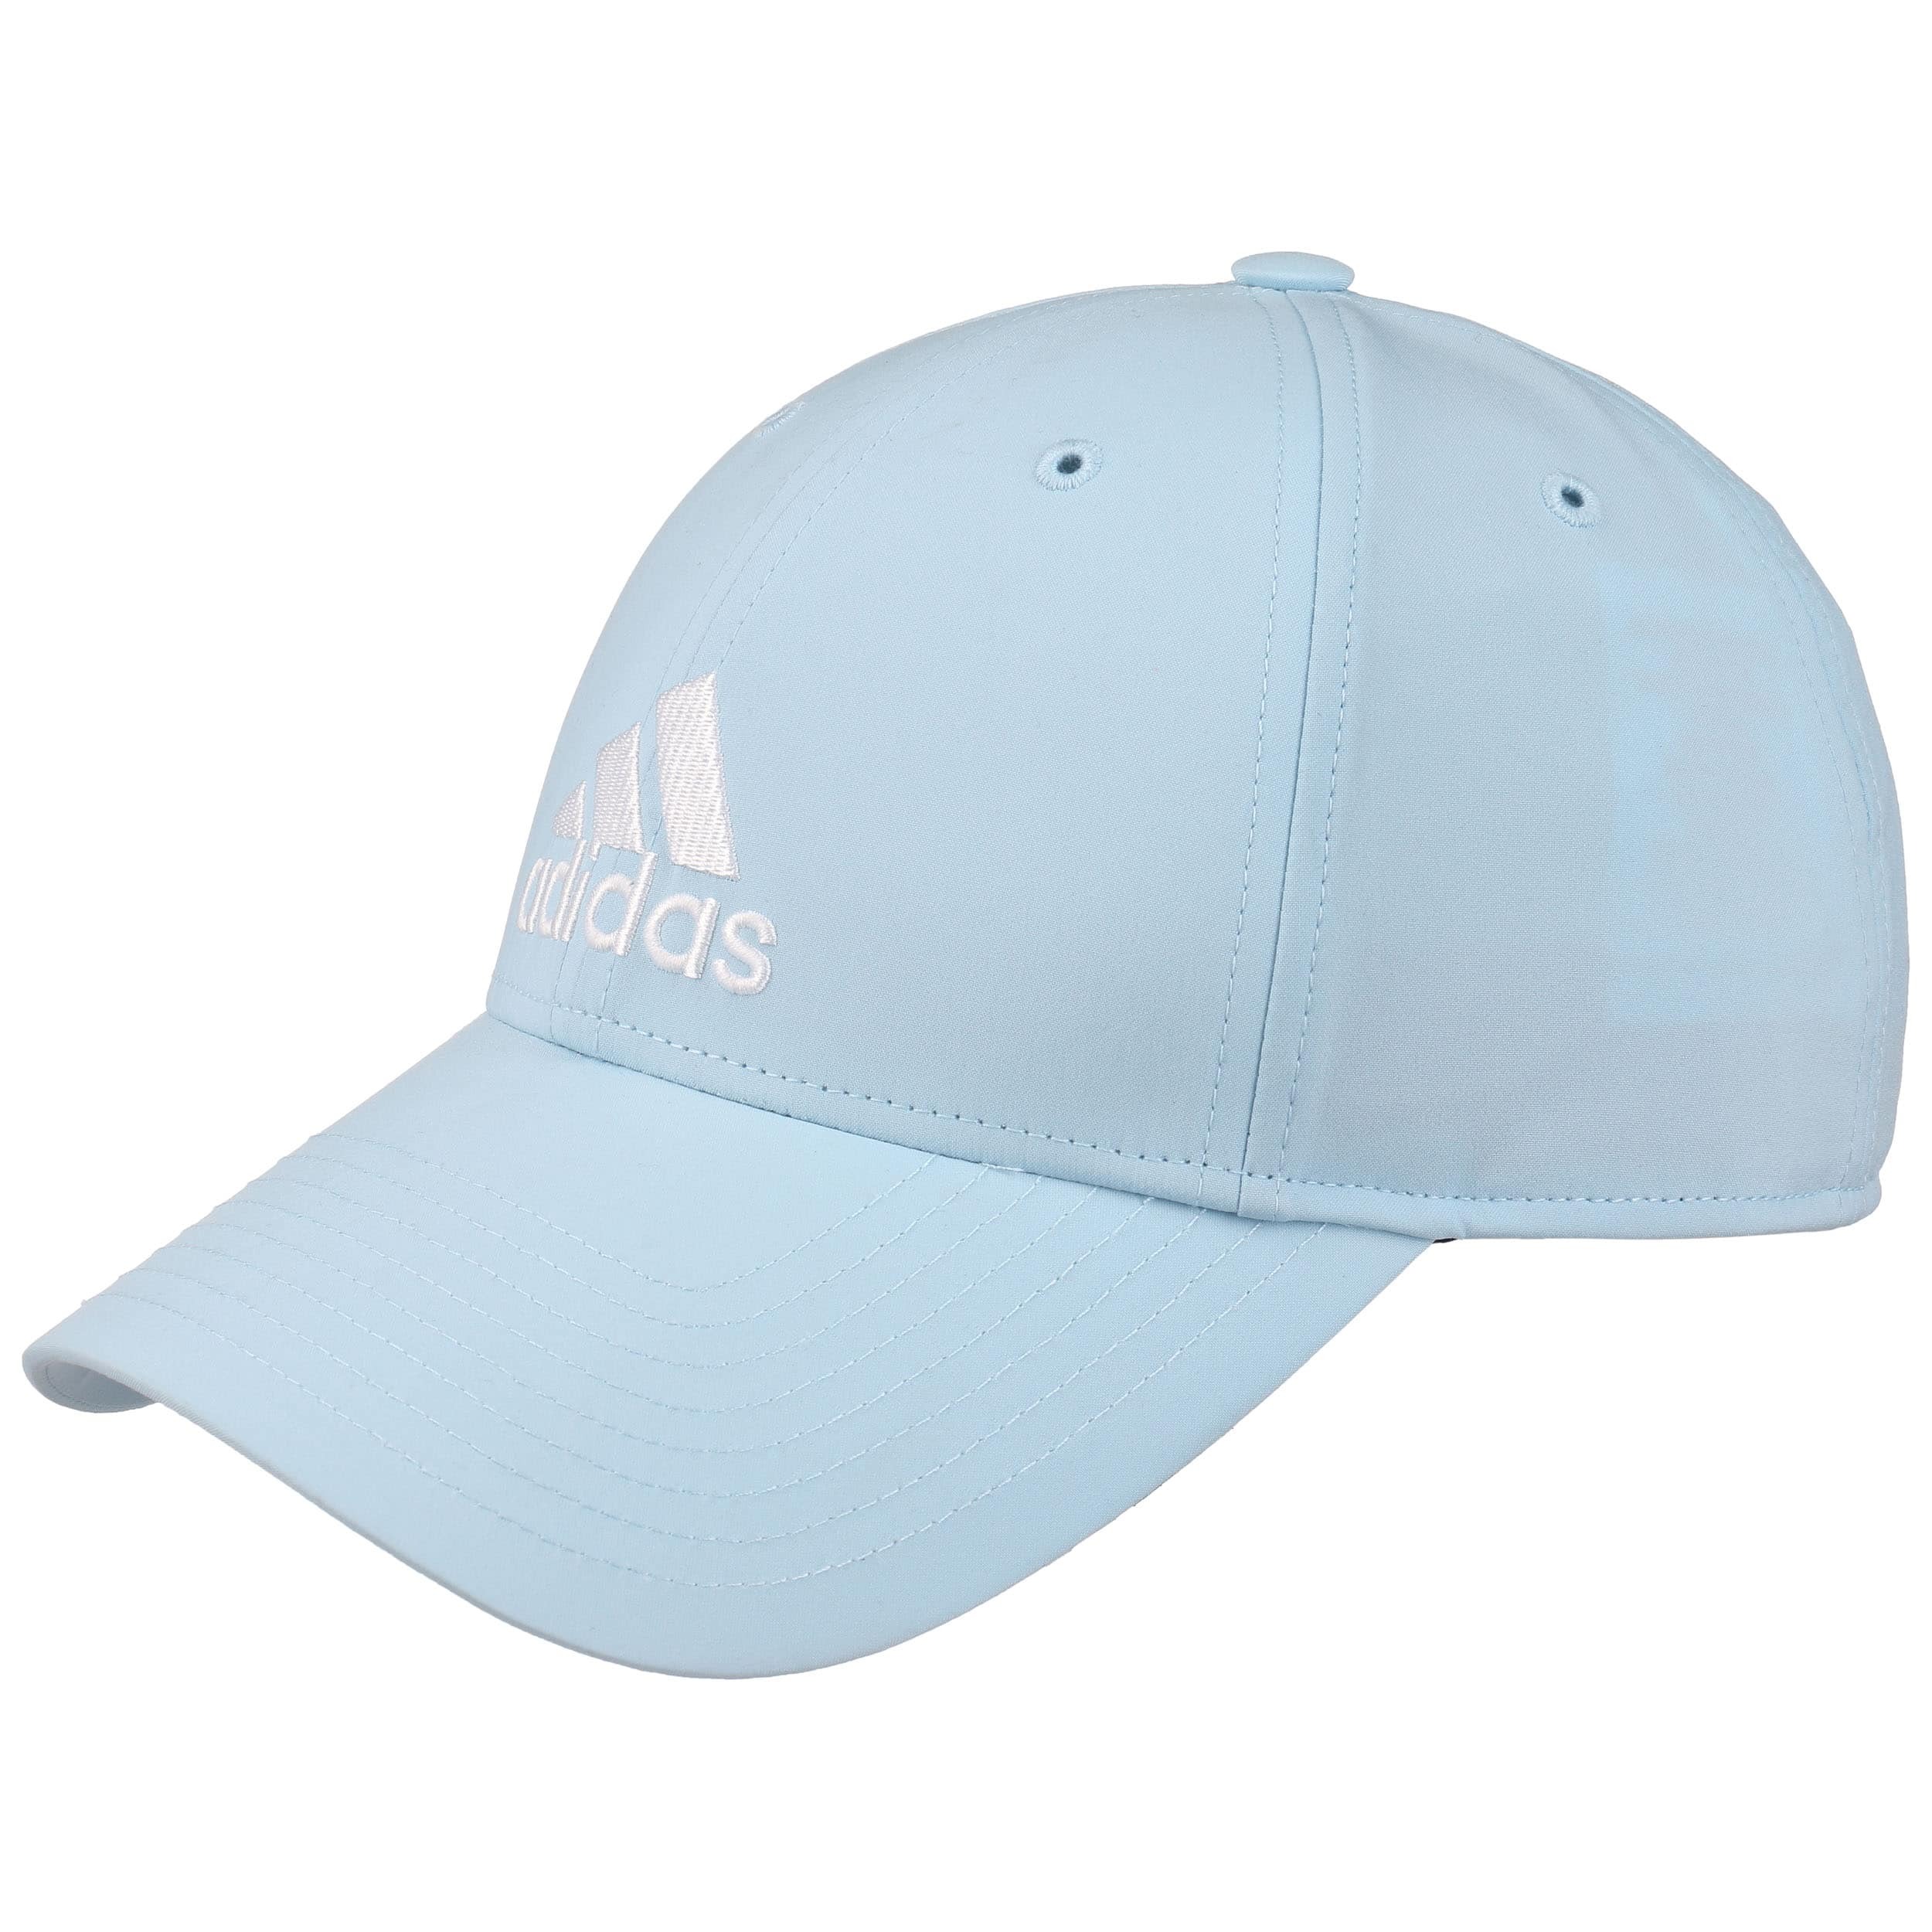 cappello adidas azzurro